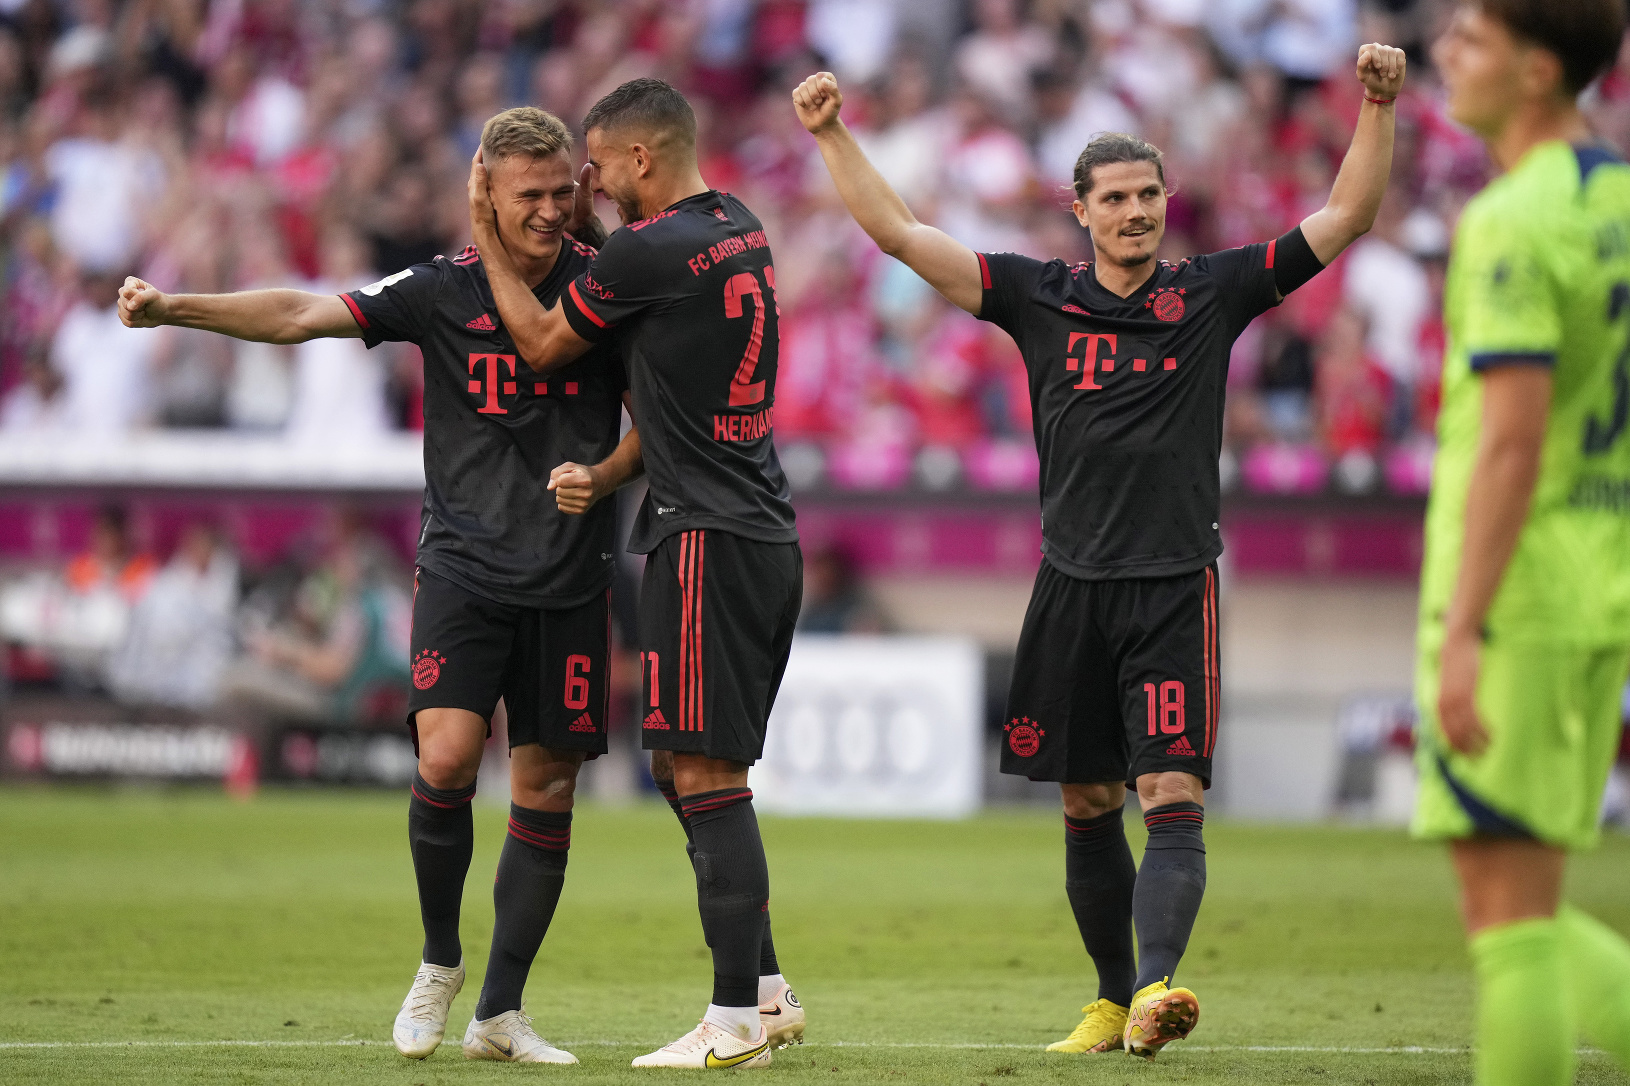 Galéria k článku: VIDEO Čisté konto a pohodlné víťazstvo pre majstra: Bayern je po dvoch kolách stopercentný - fotografia 2/6 | Sportky